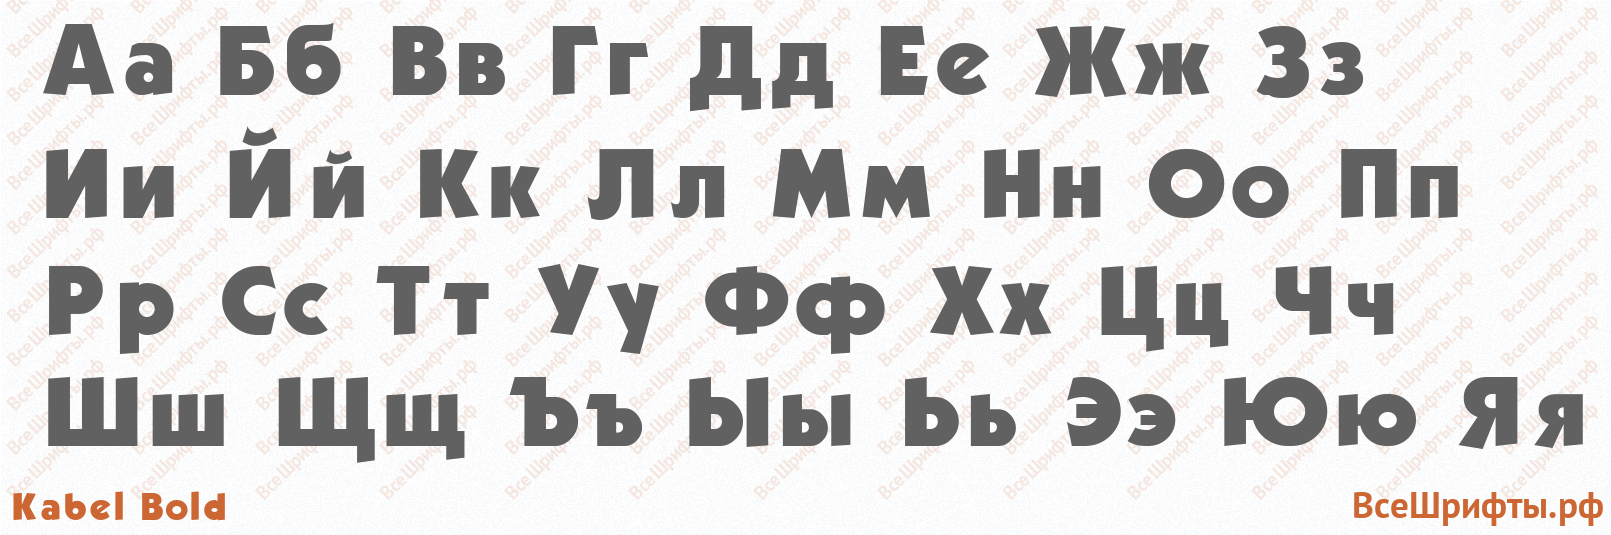 Шрифт Kabel Bold с русскими буквами